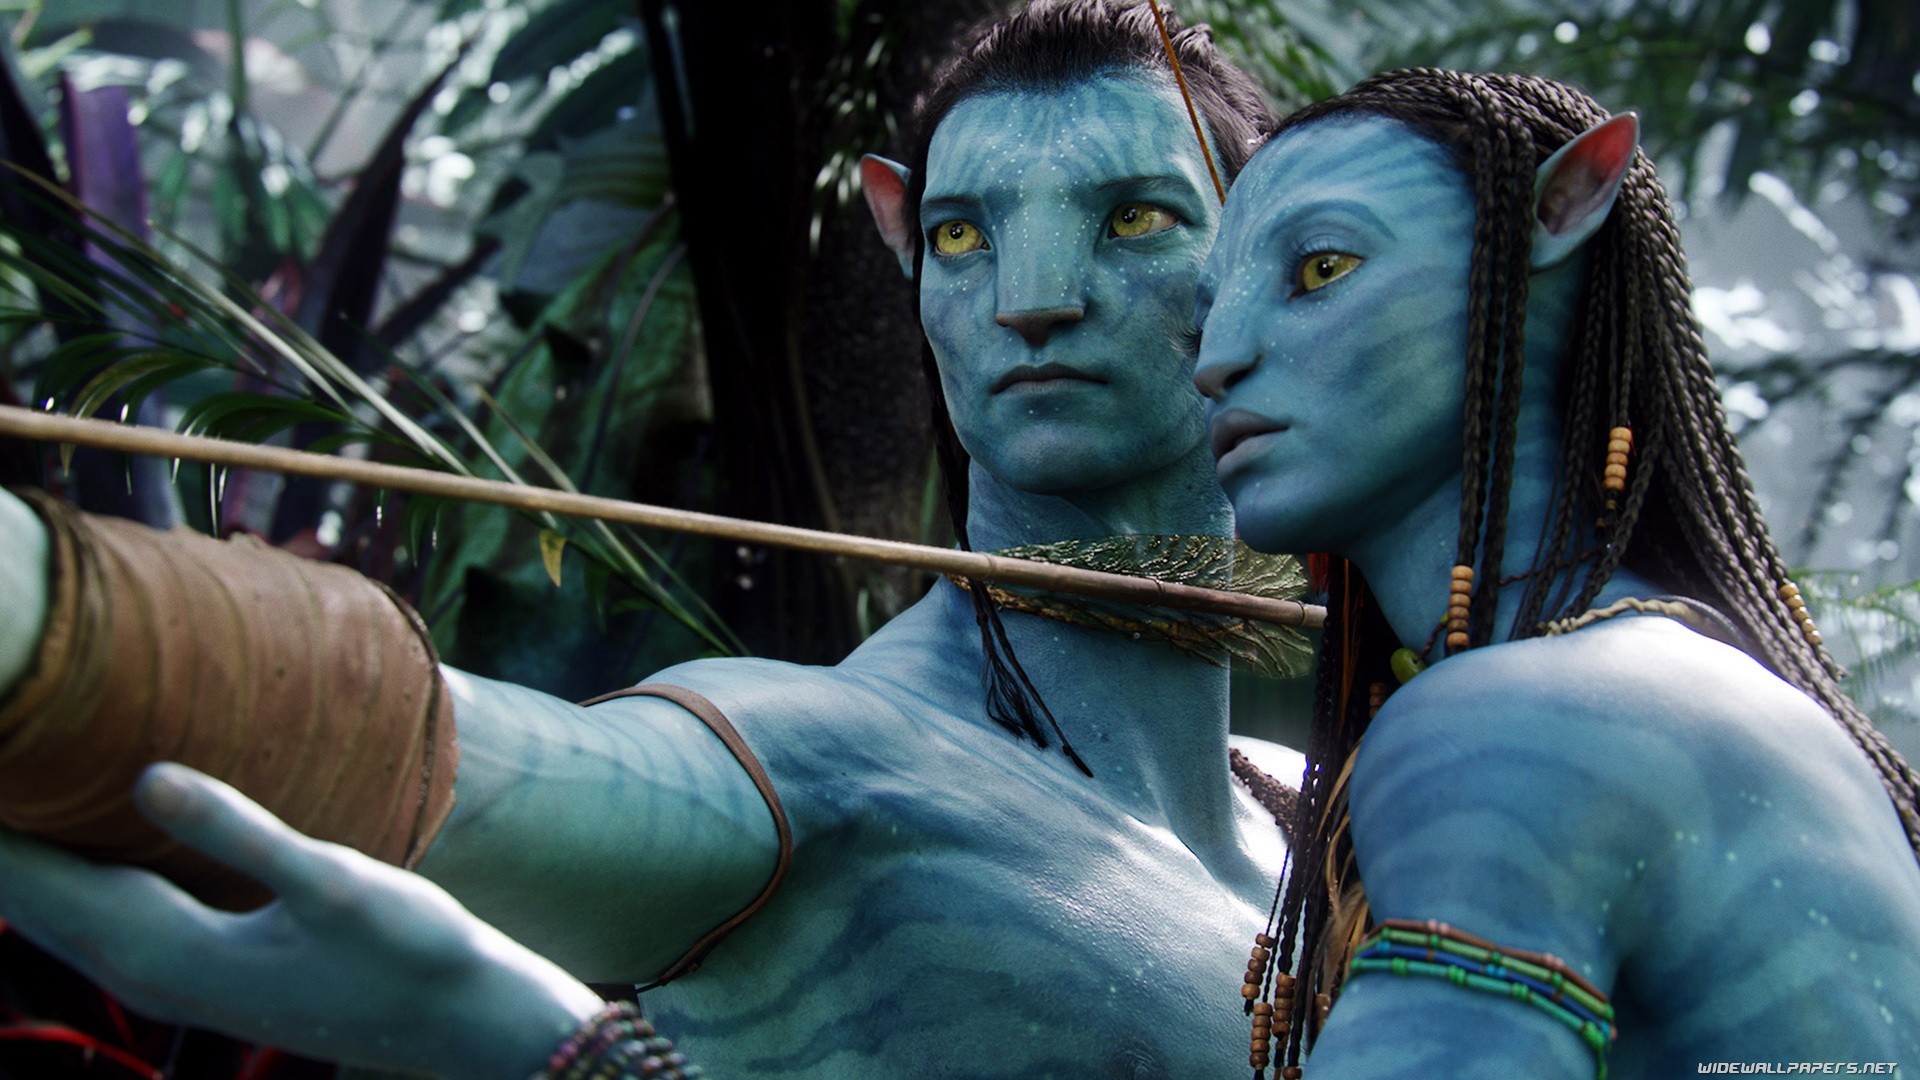 General 1920x1080 Arrow movie scenes Avatar science fiction blue skin film stills movies